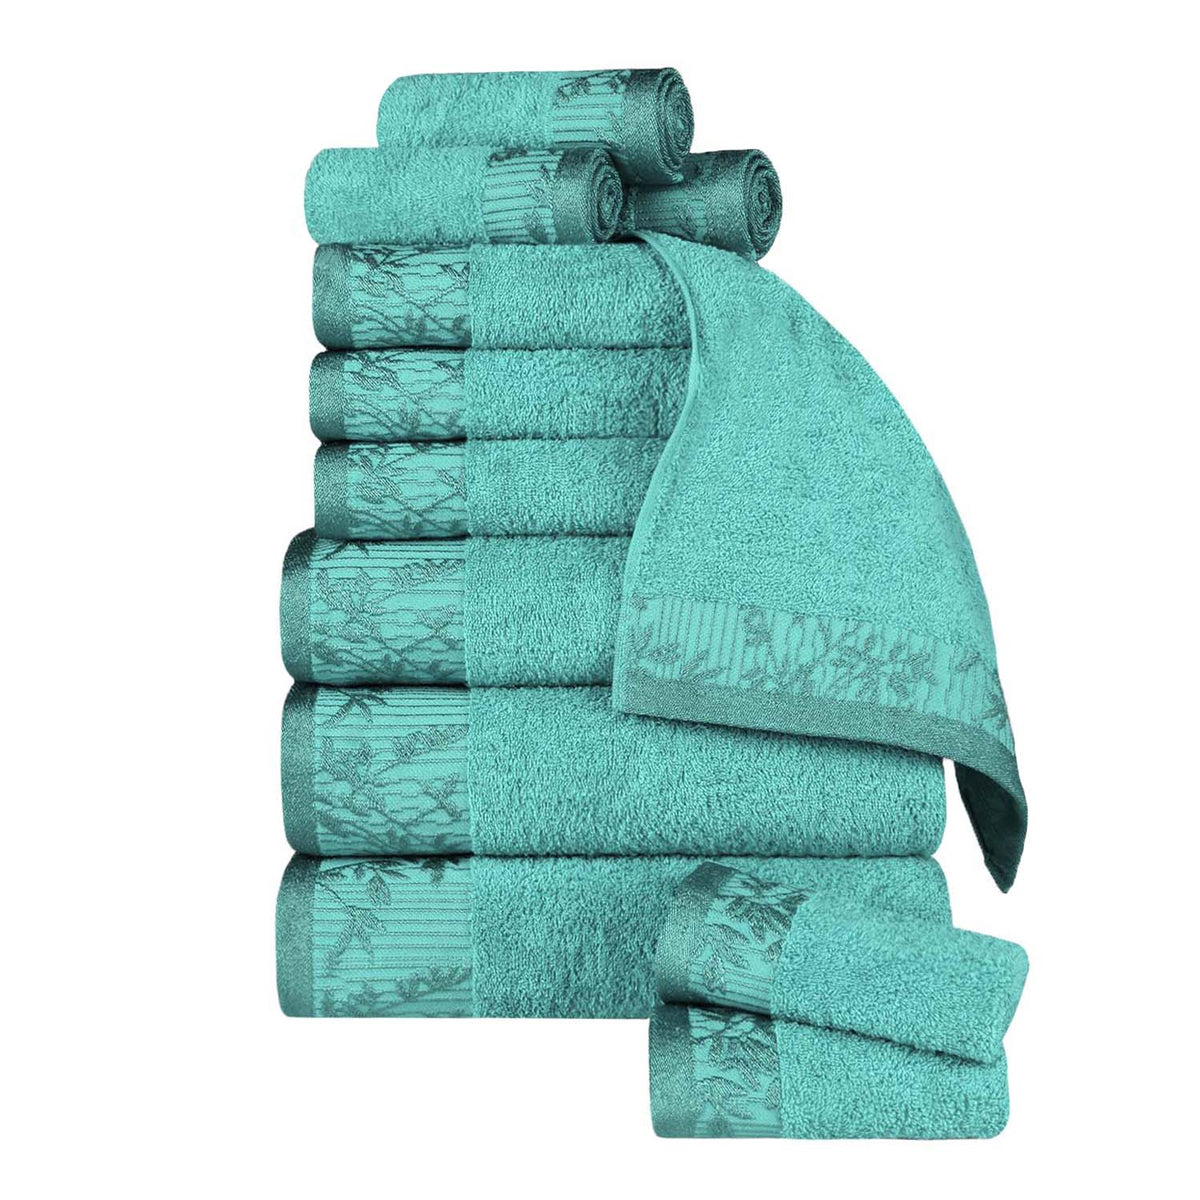 Superior Wisteria Cotton Floral Jacquard 12 Piece Towel Set - Turquoise